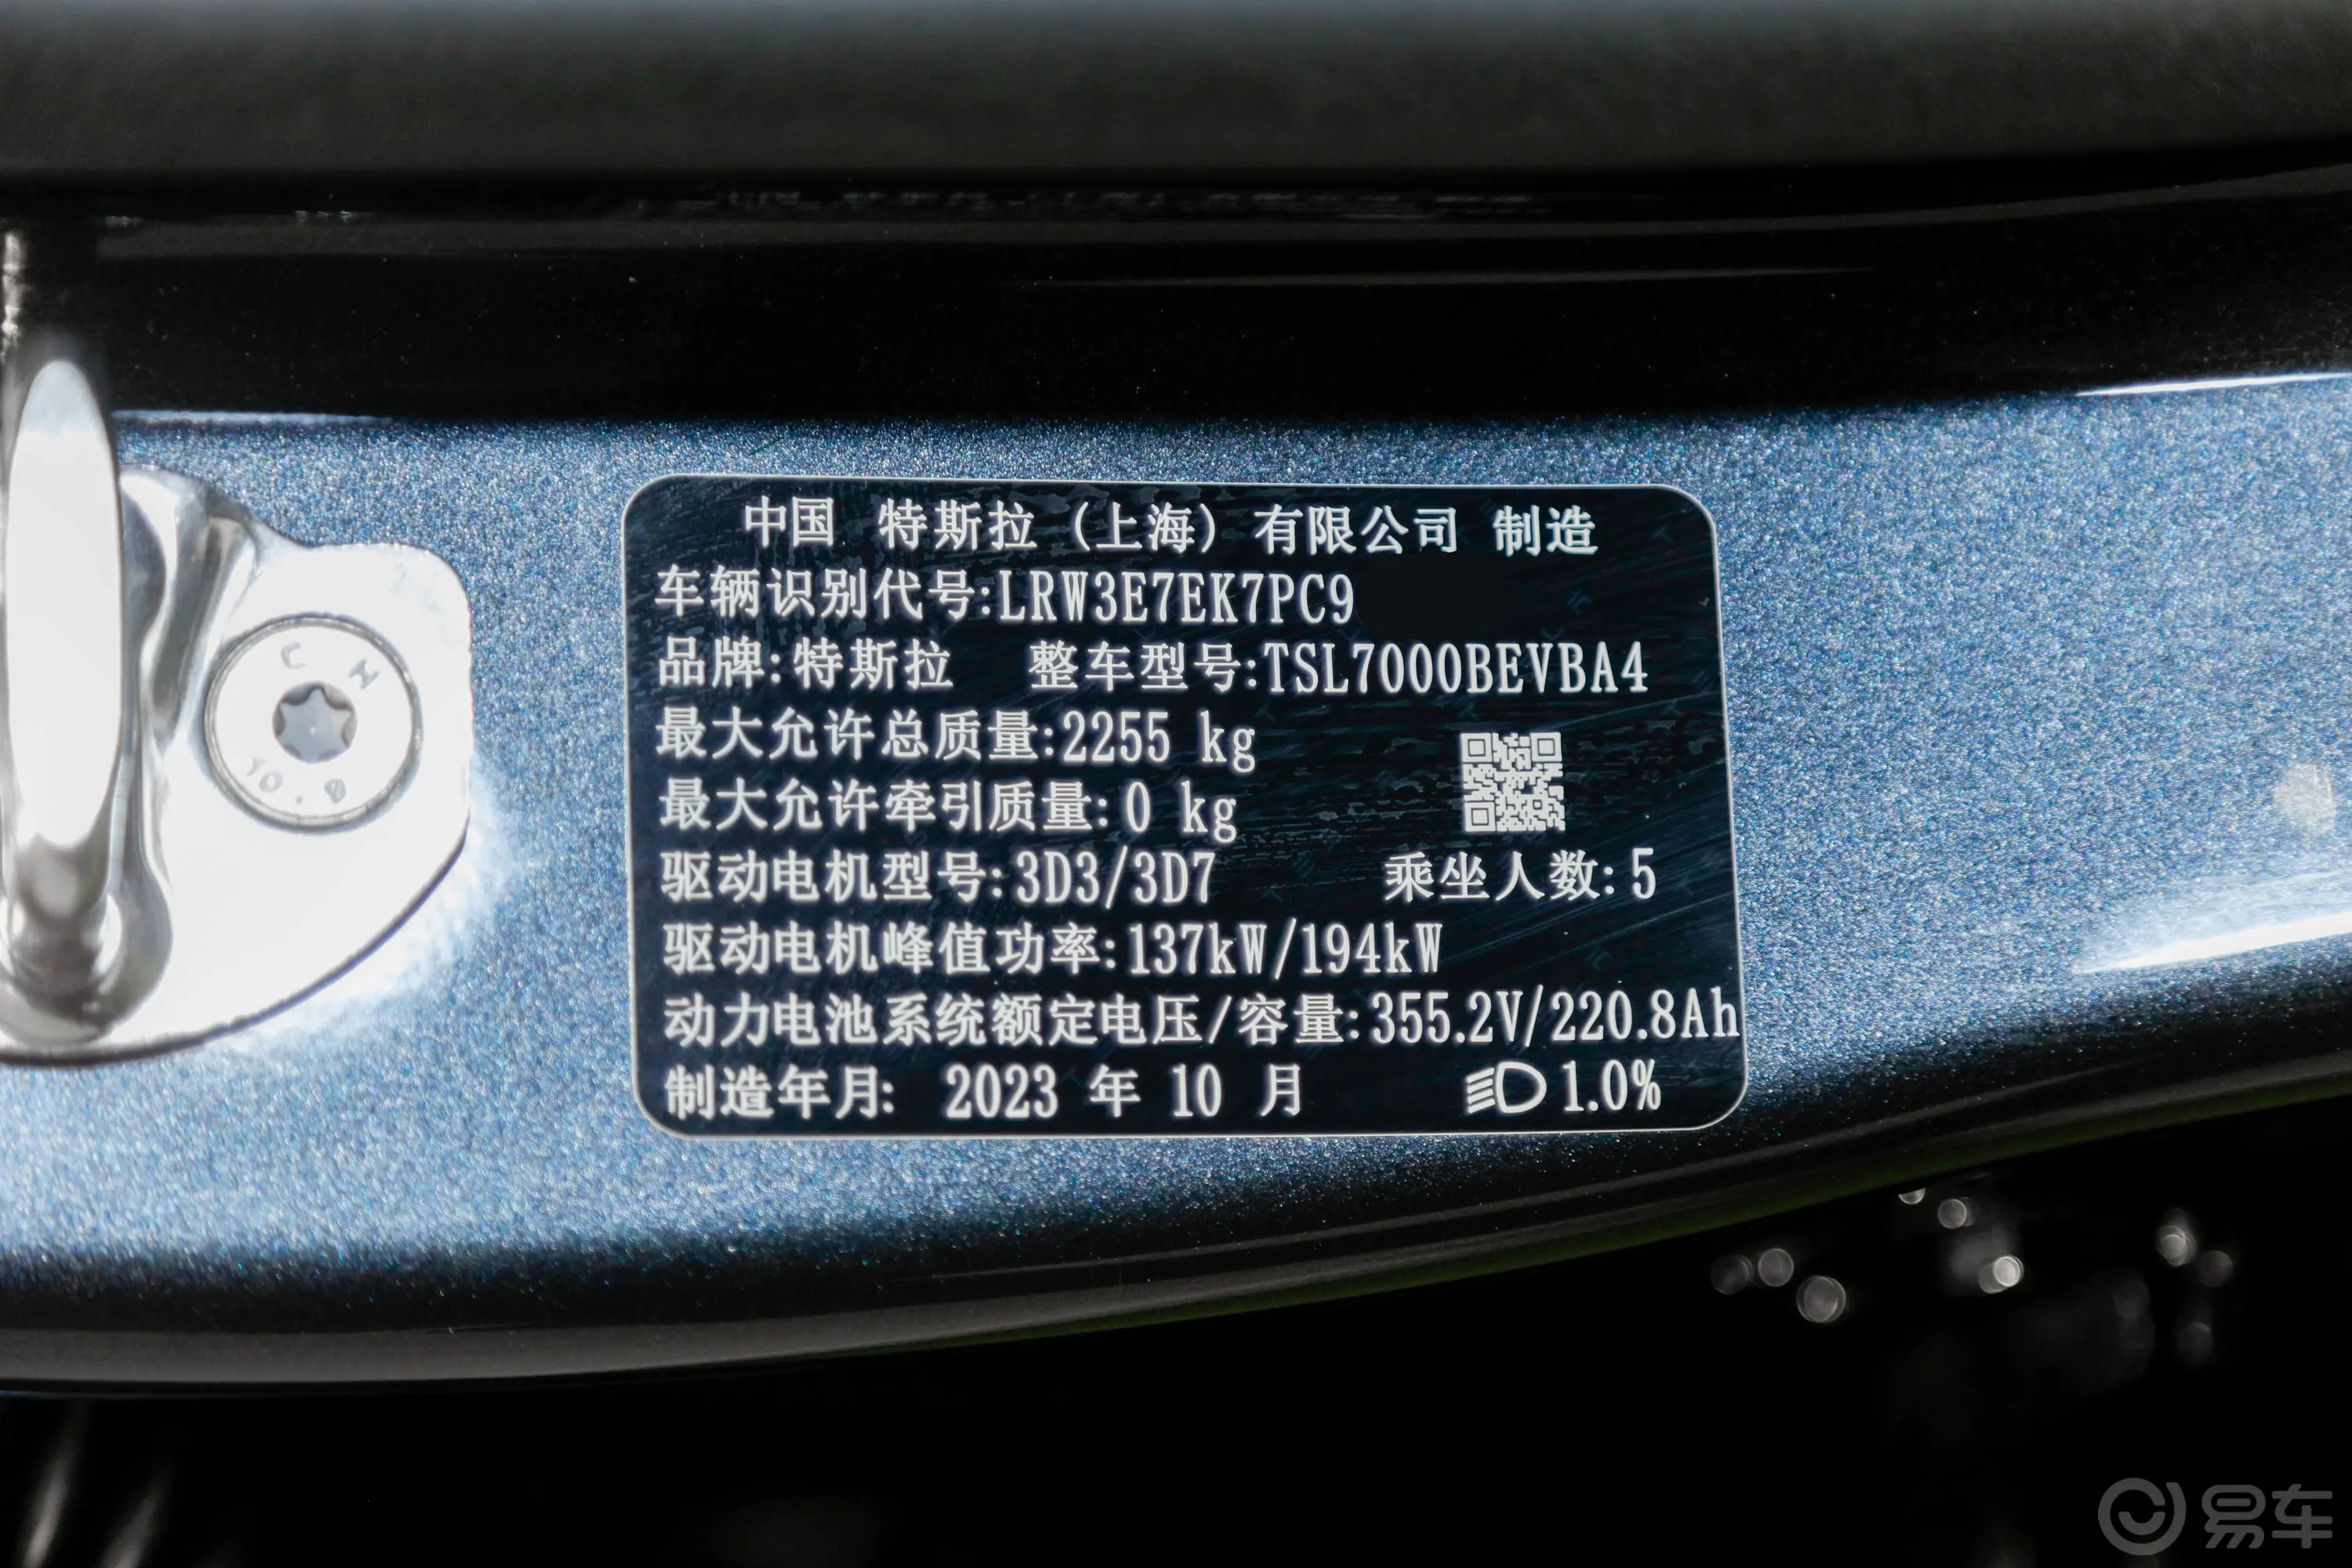 Model 3713km 长续航全轮驱动版车辆信息铭牌